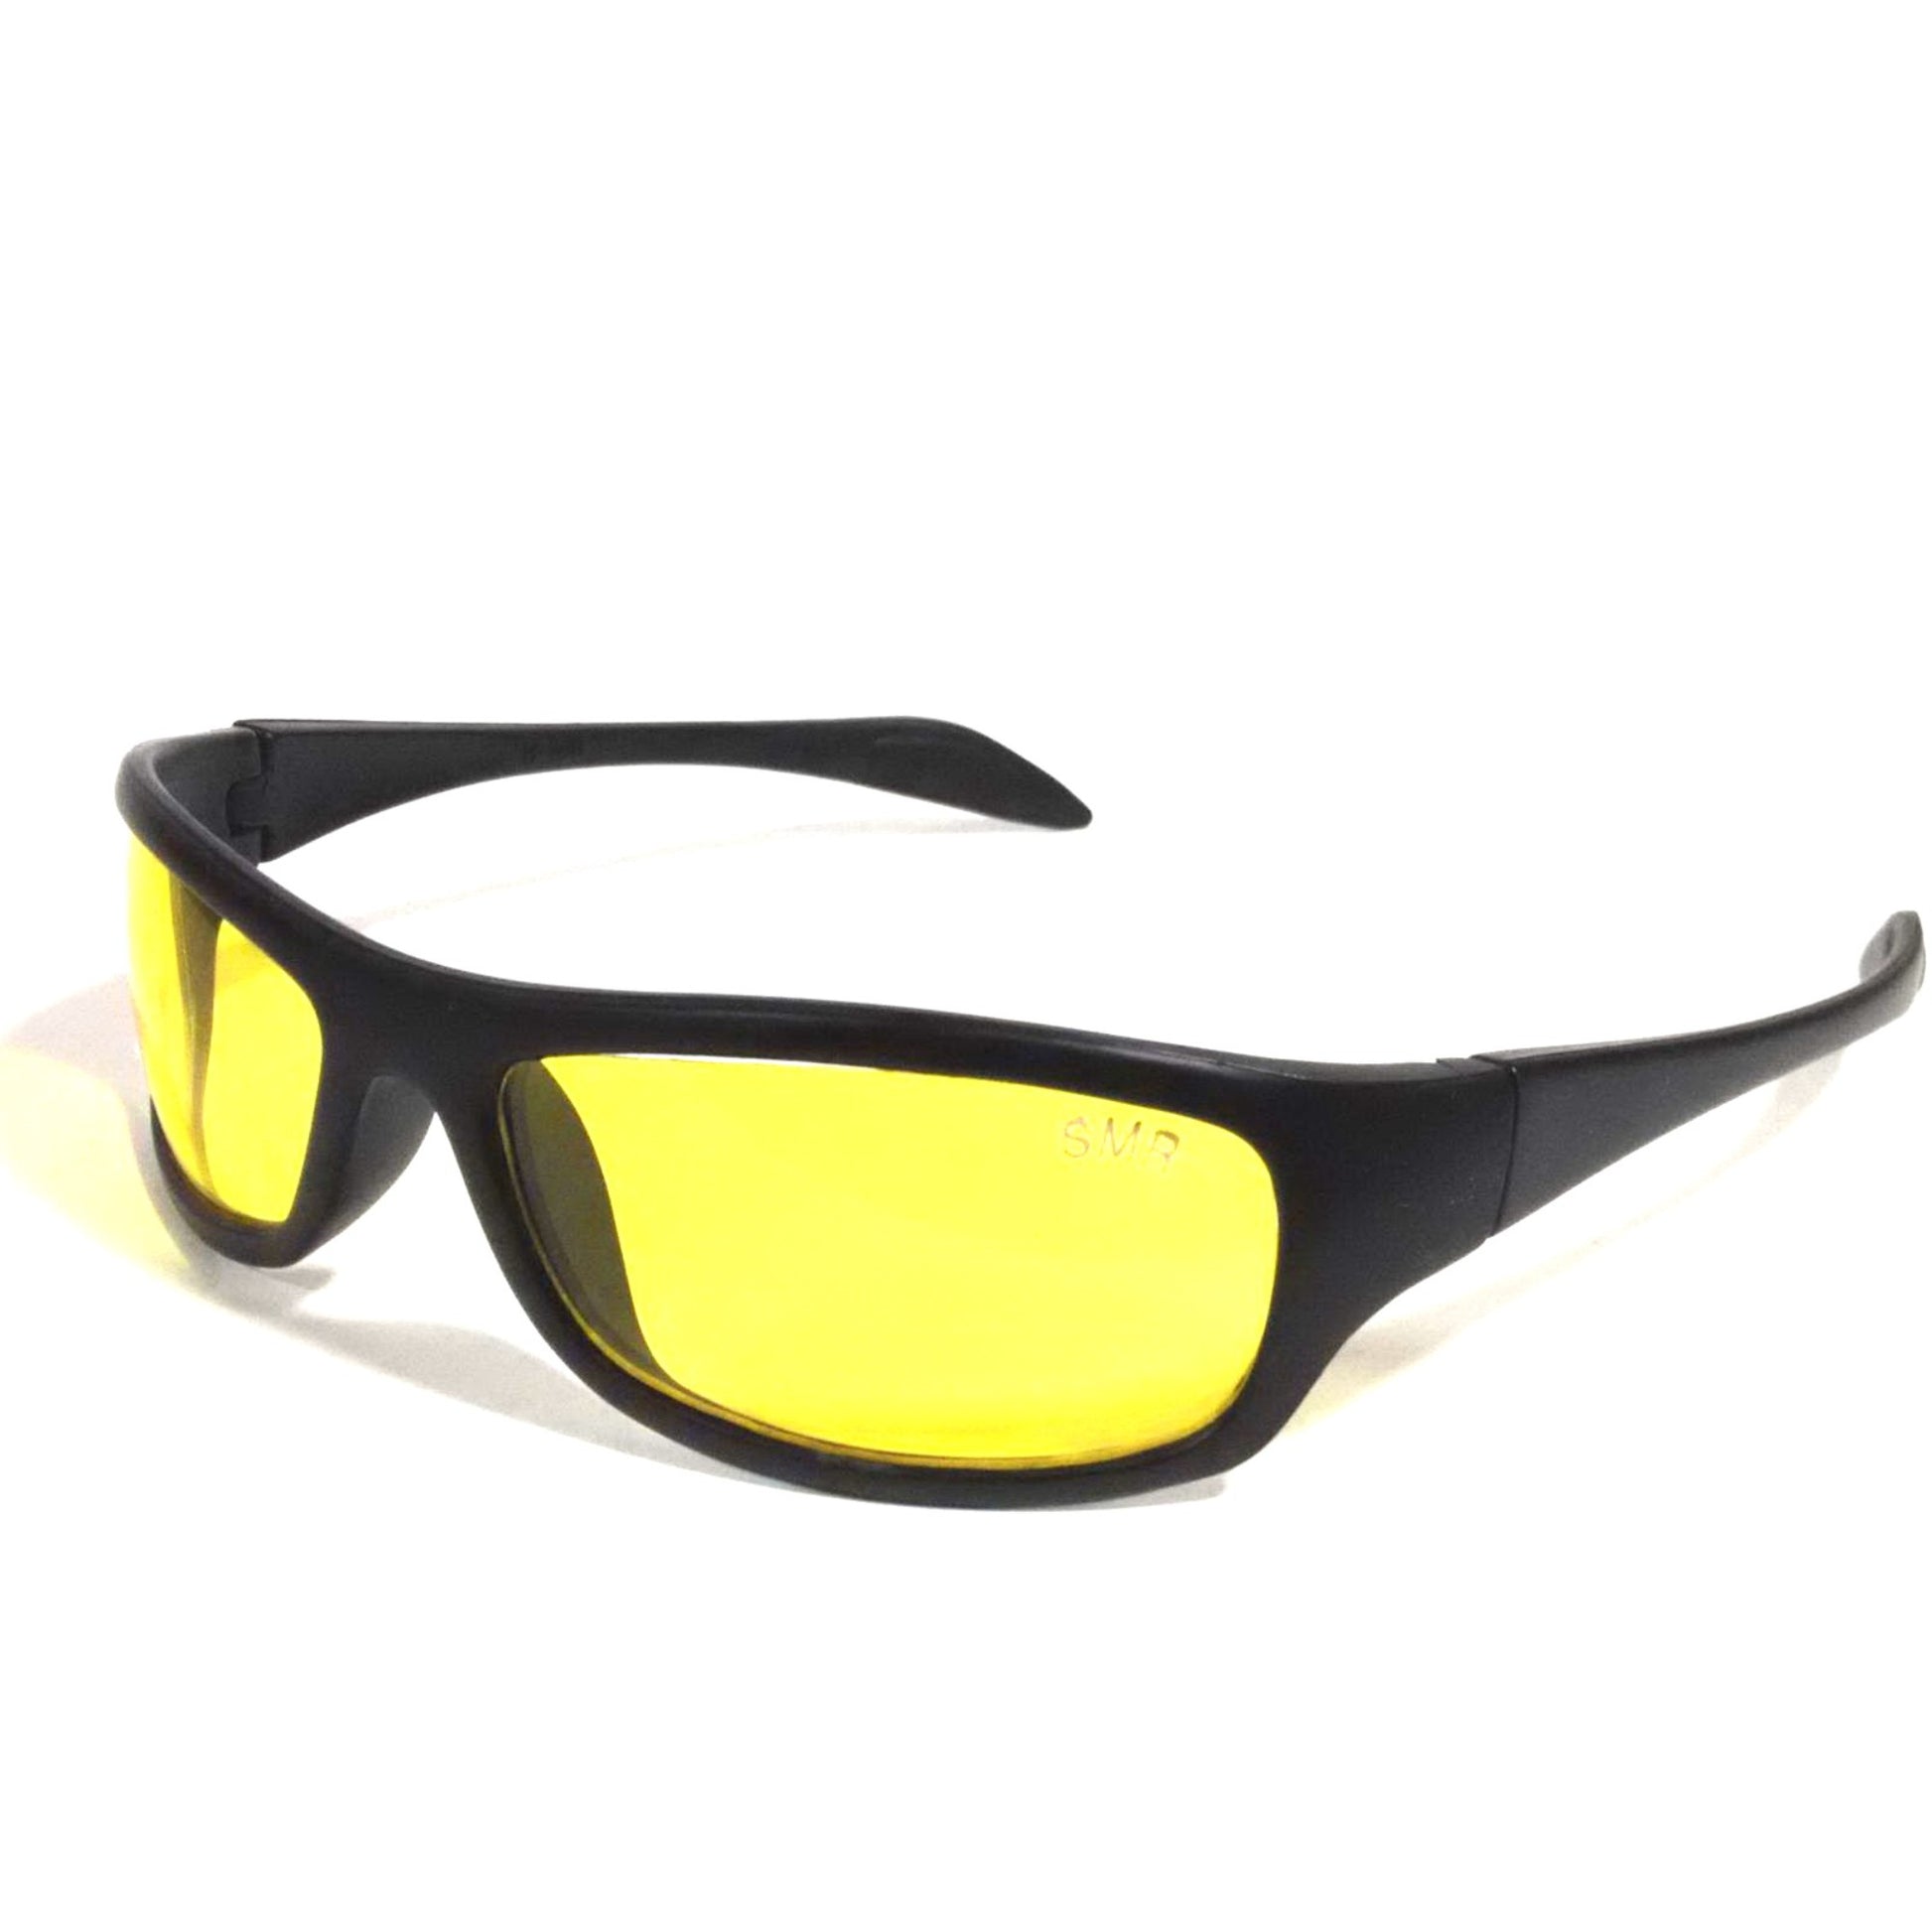 Wraparound Sports HD Vision Night Driving Sunglasses Angle